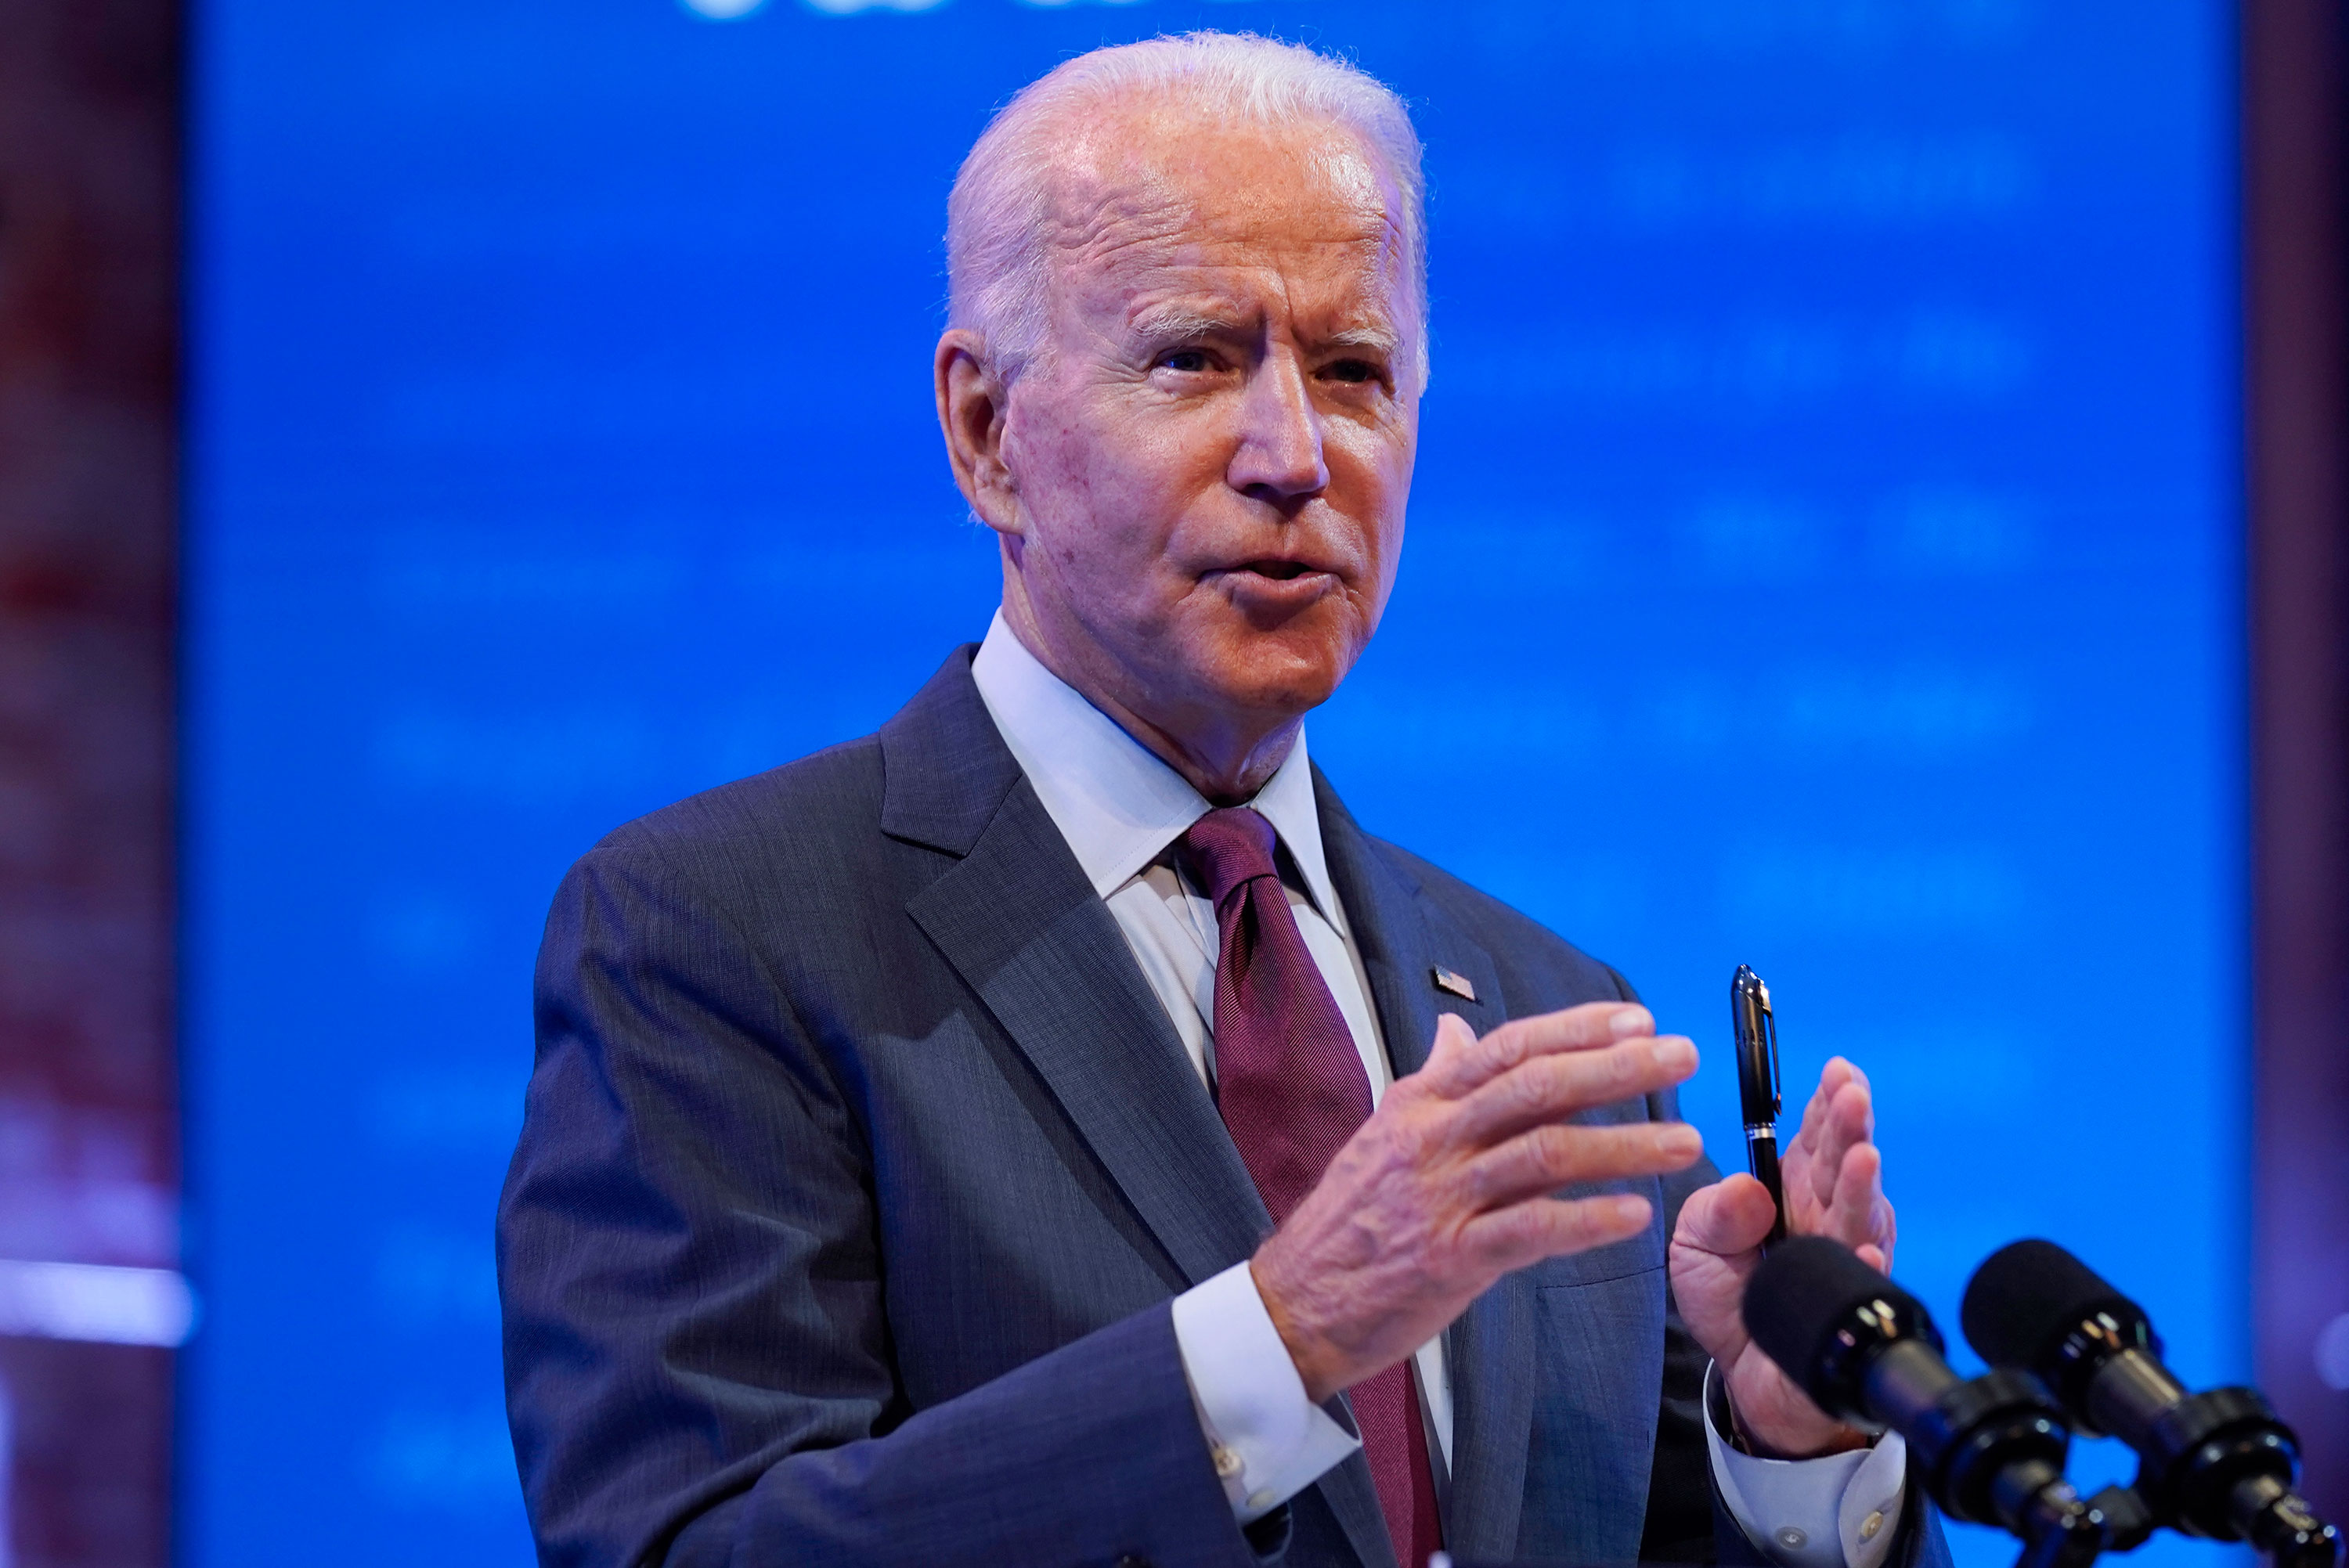 Democratic presidential candidate Joe Biden gives a speech on September 27 in Wilmington, Delaware.